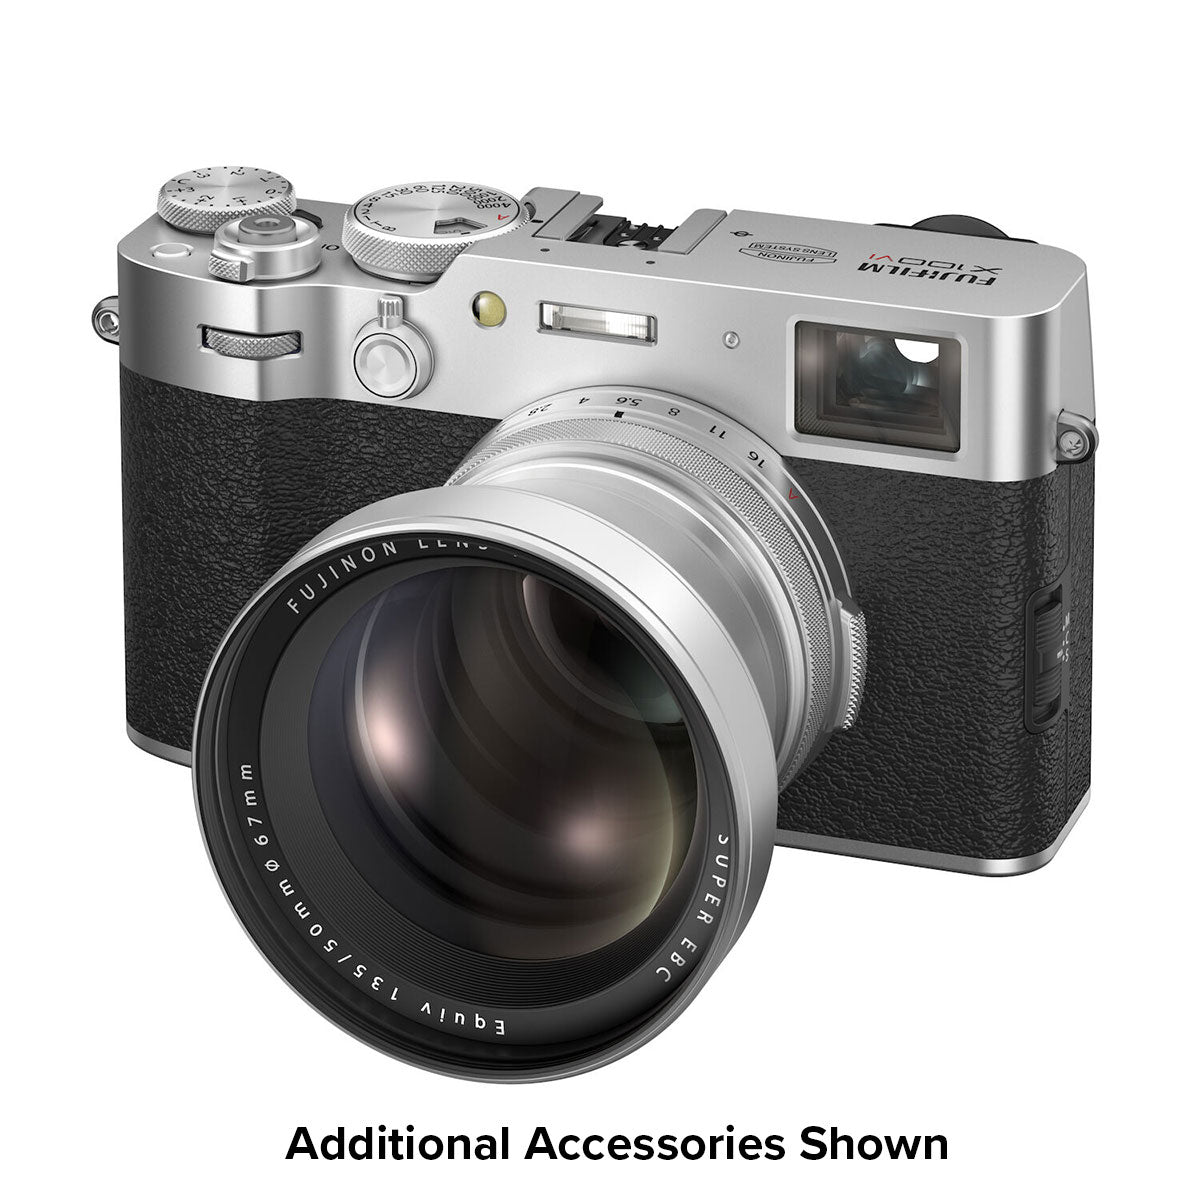 Fujifilm X100VI Digital Camera (Silver)